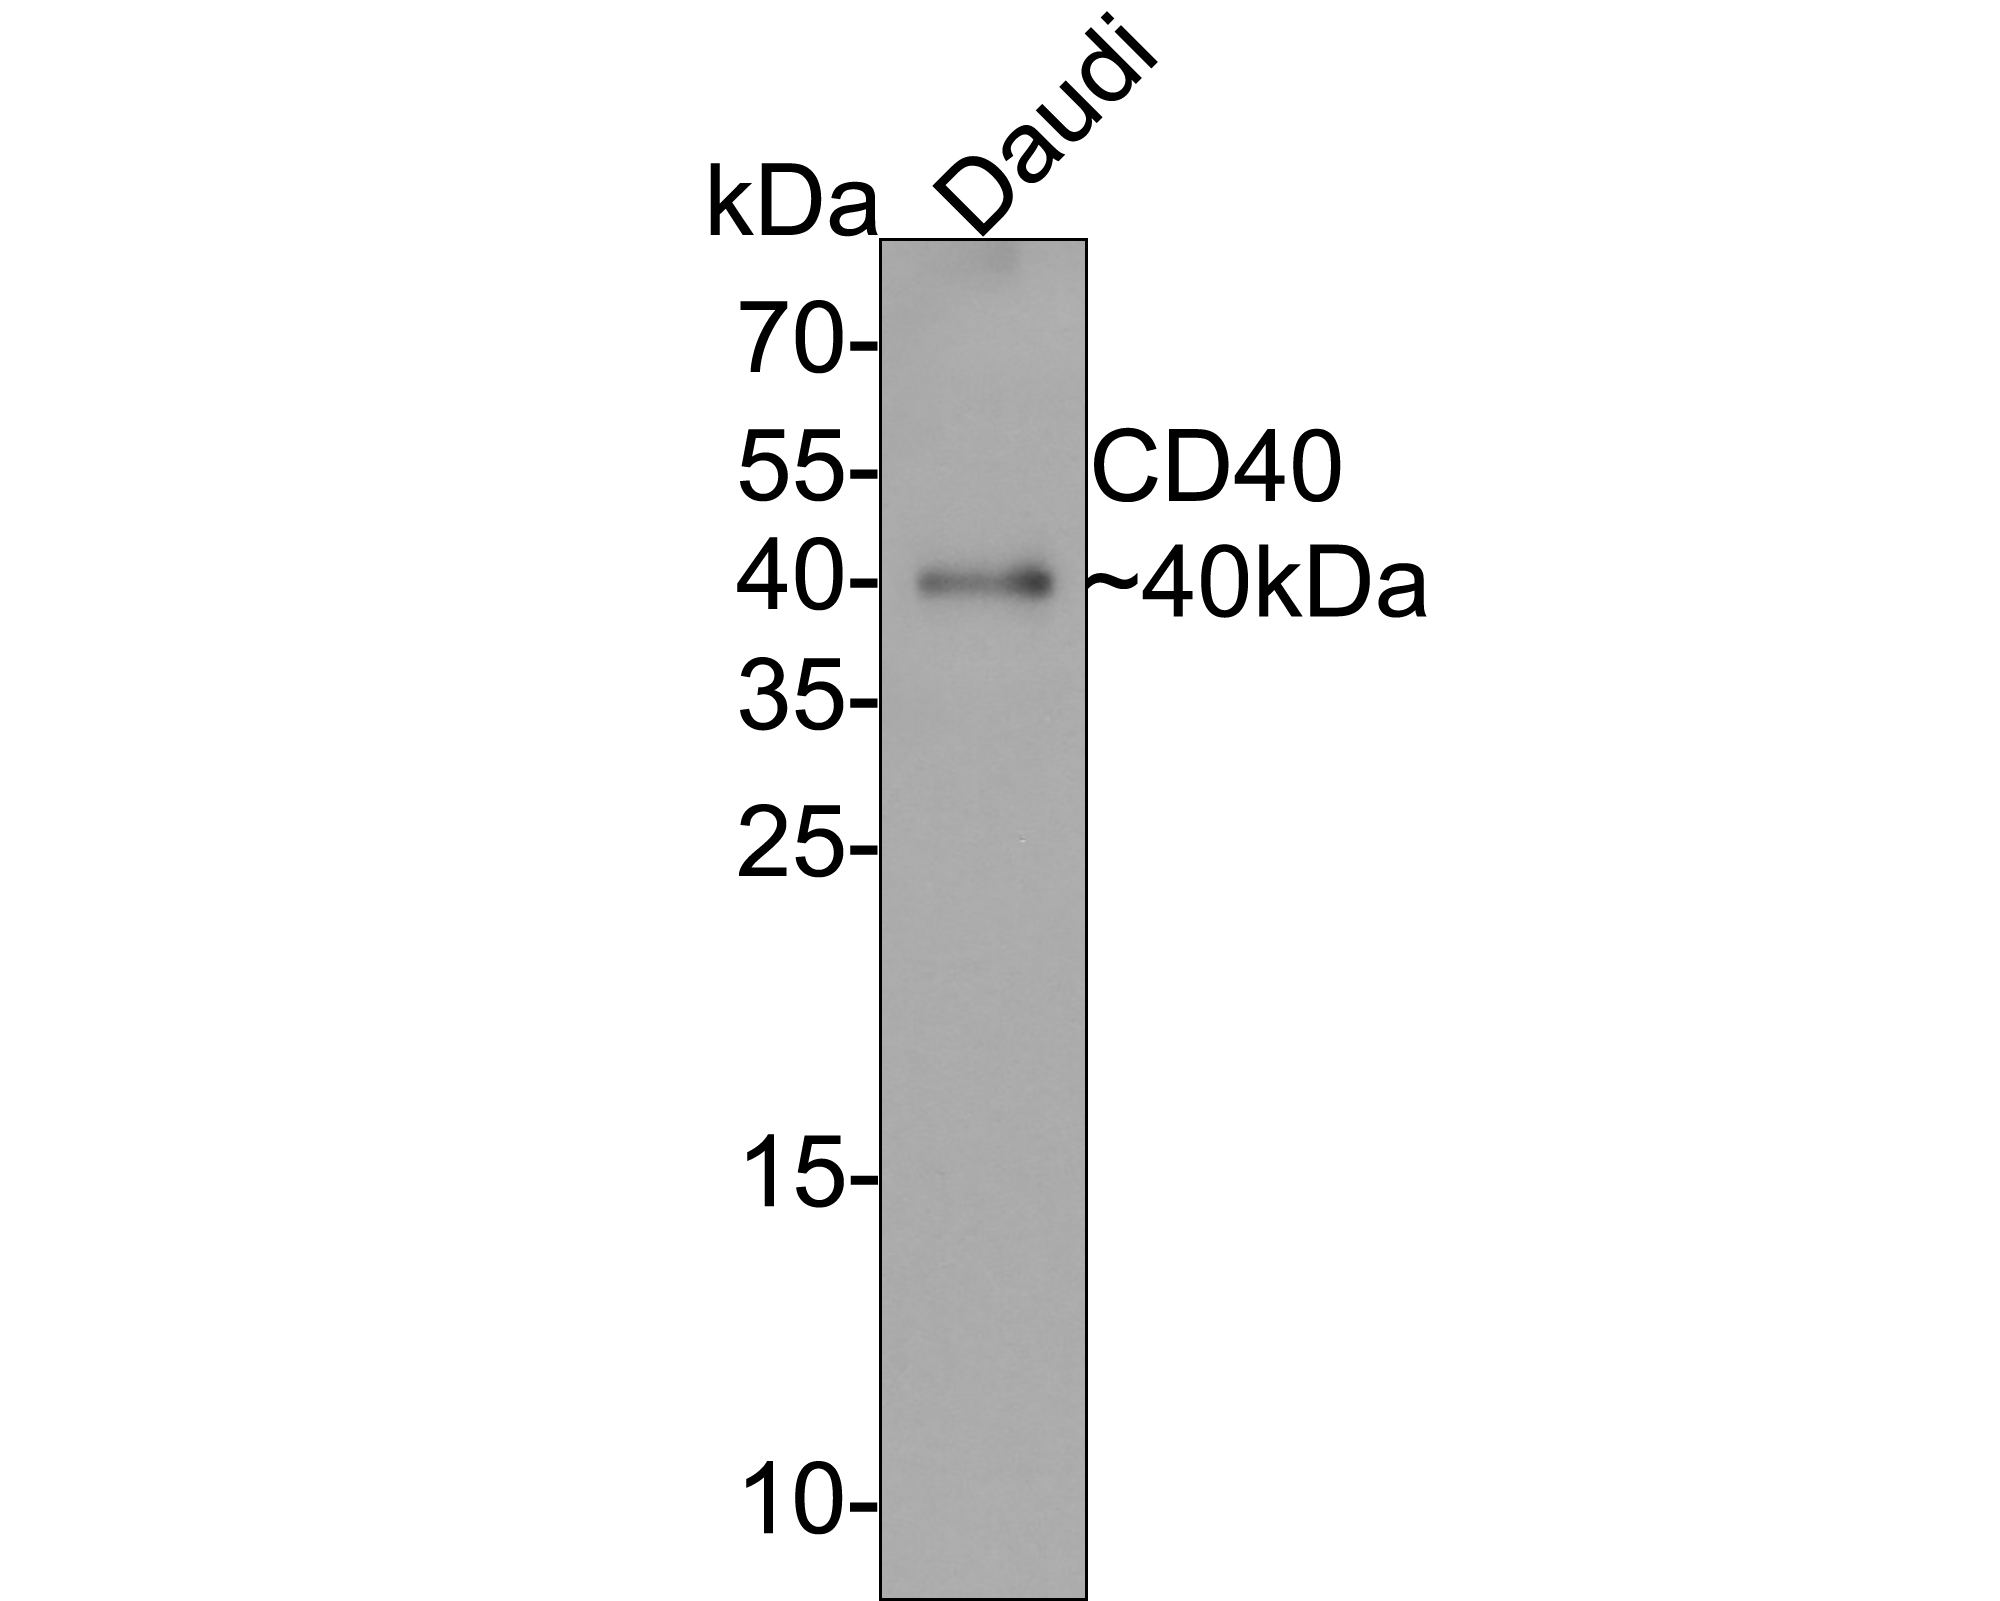 Western blot analysis of CD40 on Daudi cell lysate using anti-CD40 antibody at 1/2,000 dilution.